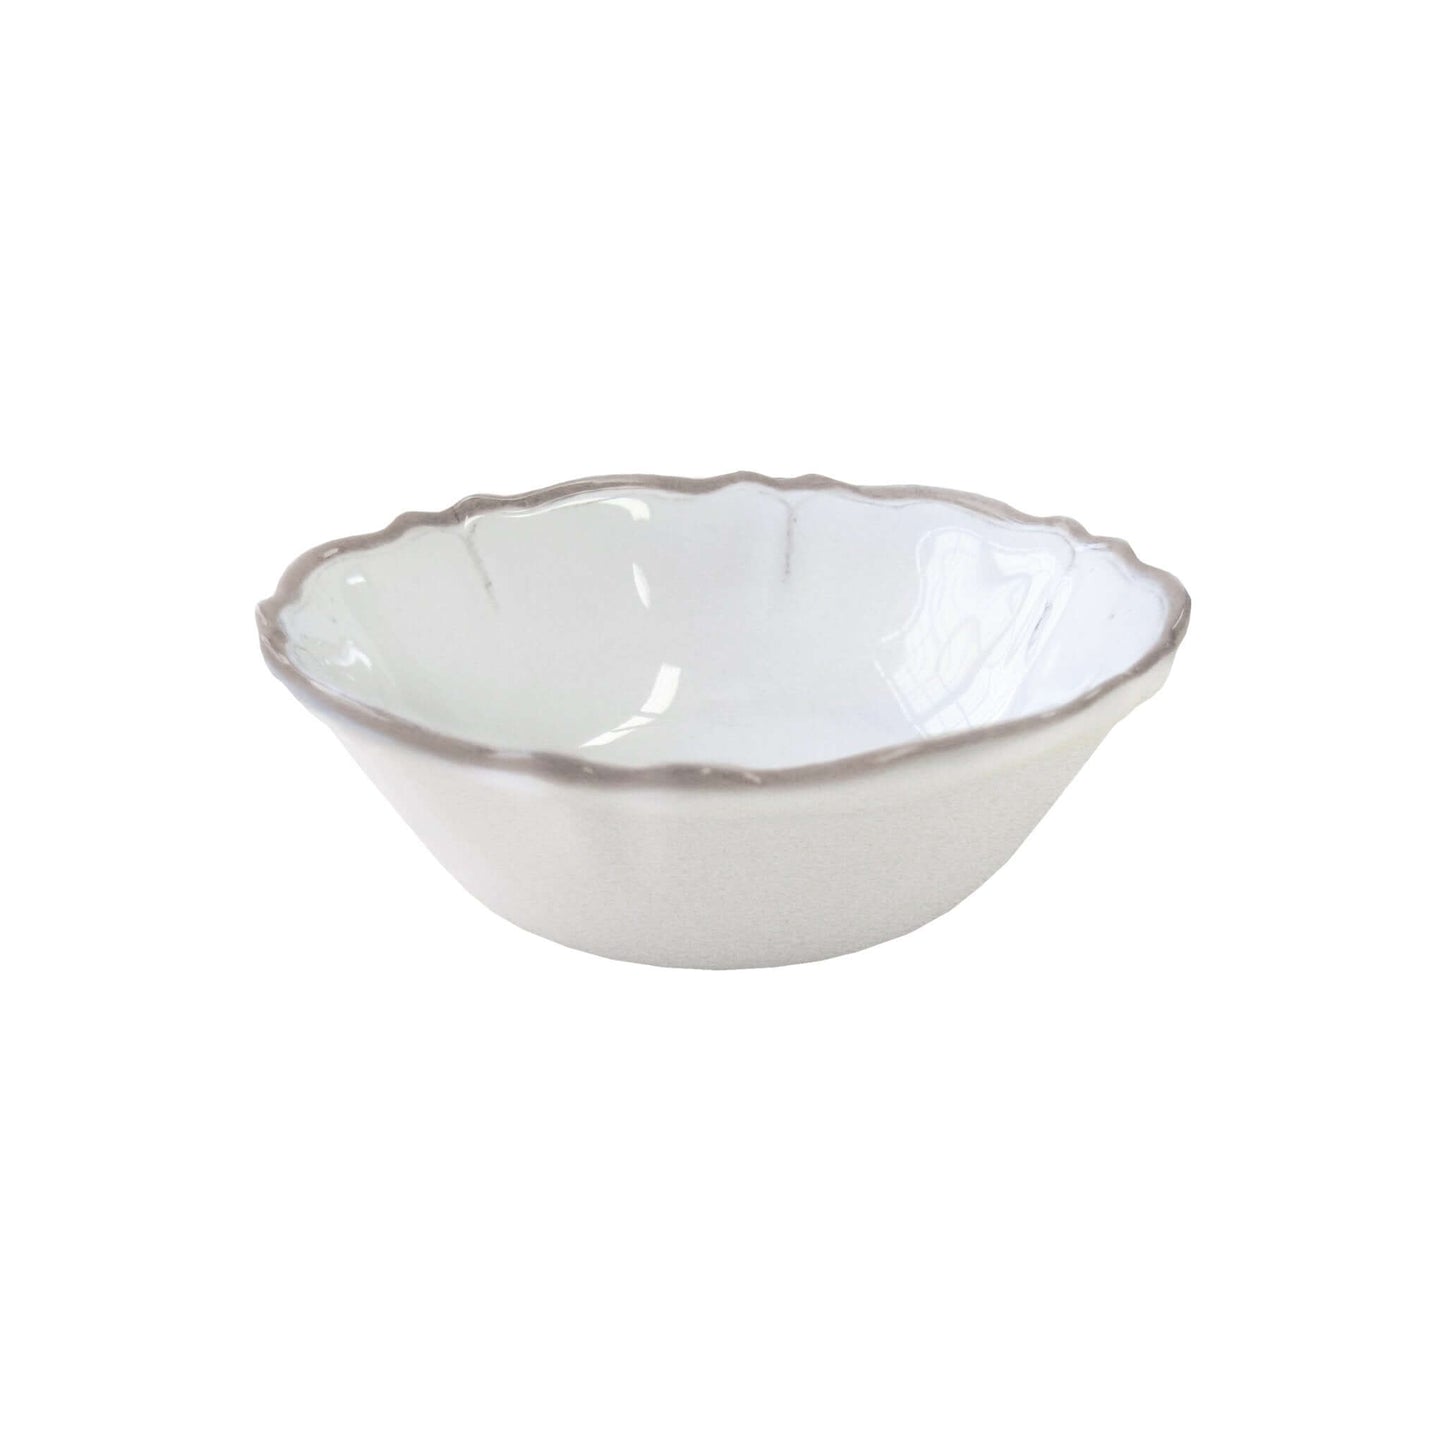 Rustica Antique White Cereal Bowl - Royalties